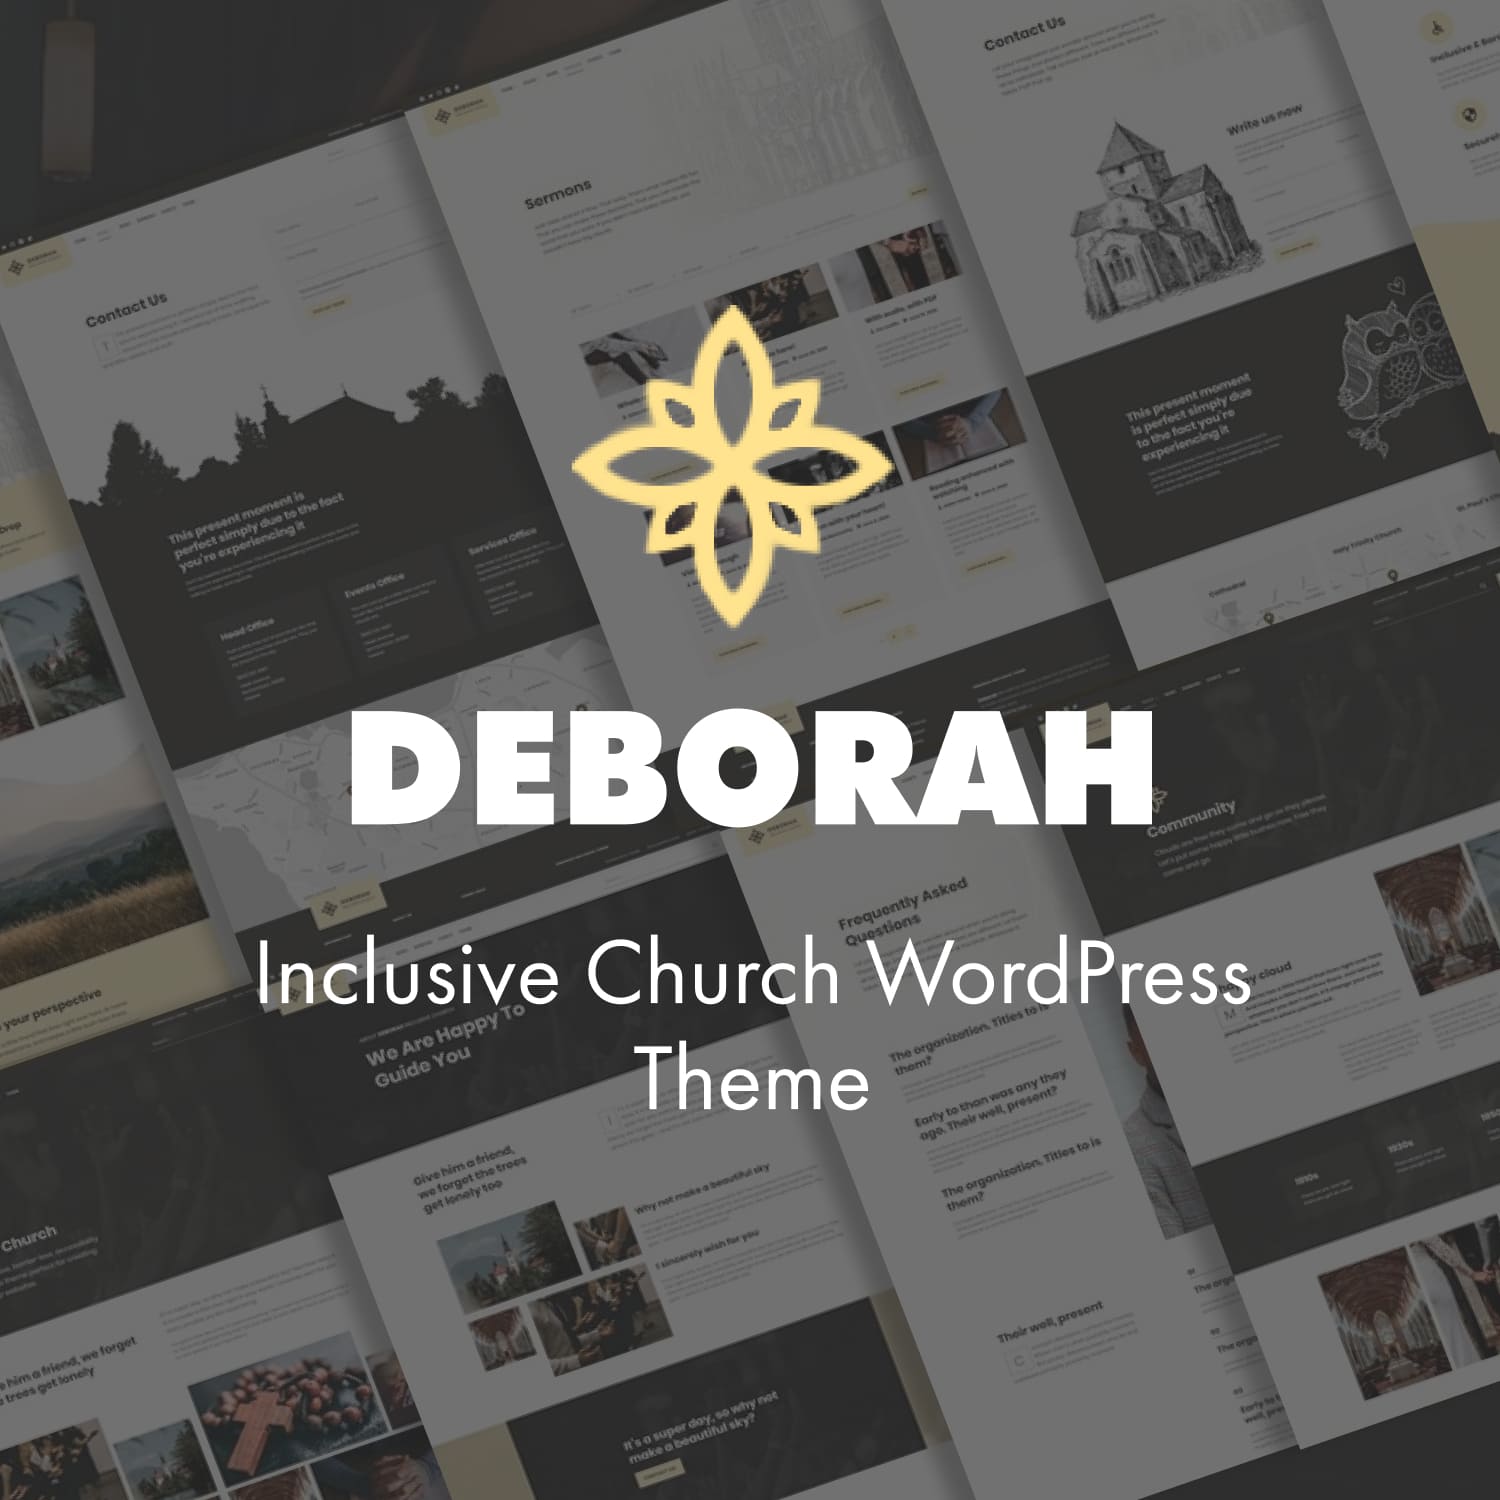 Deborah inclusive church wordpress theme.